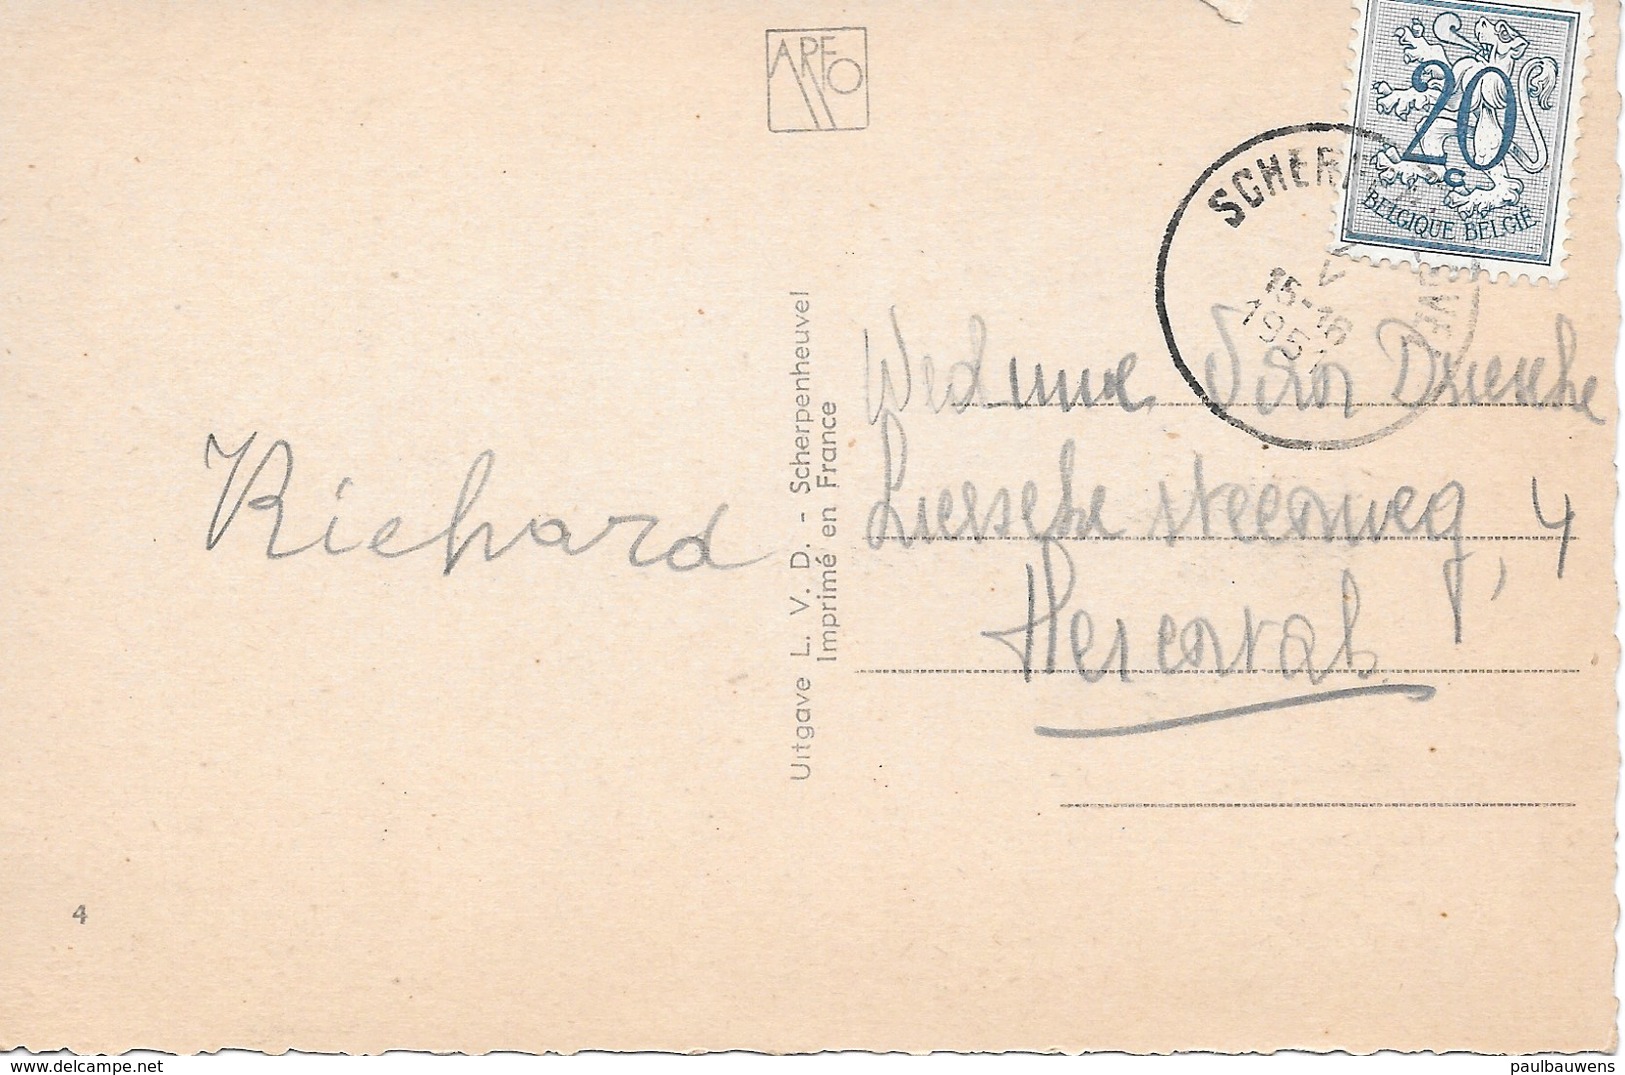 Scherpenheuvel, Binnenzicht Der Basiliek, Met Postzegel 1951. - Scherpenheuvel-Zichem